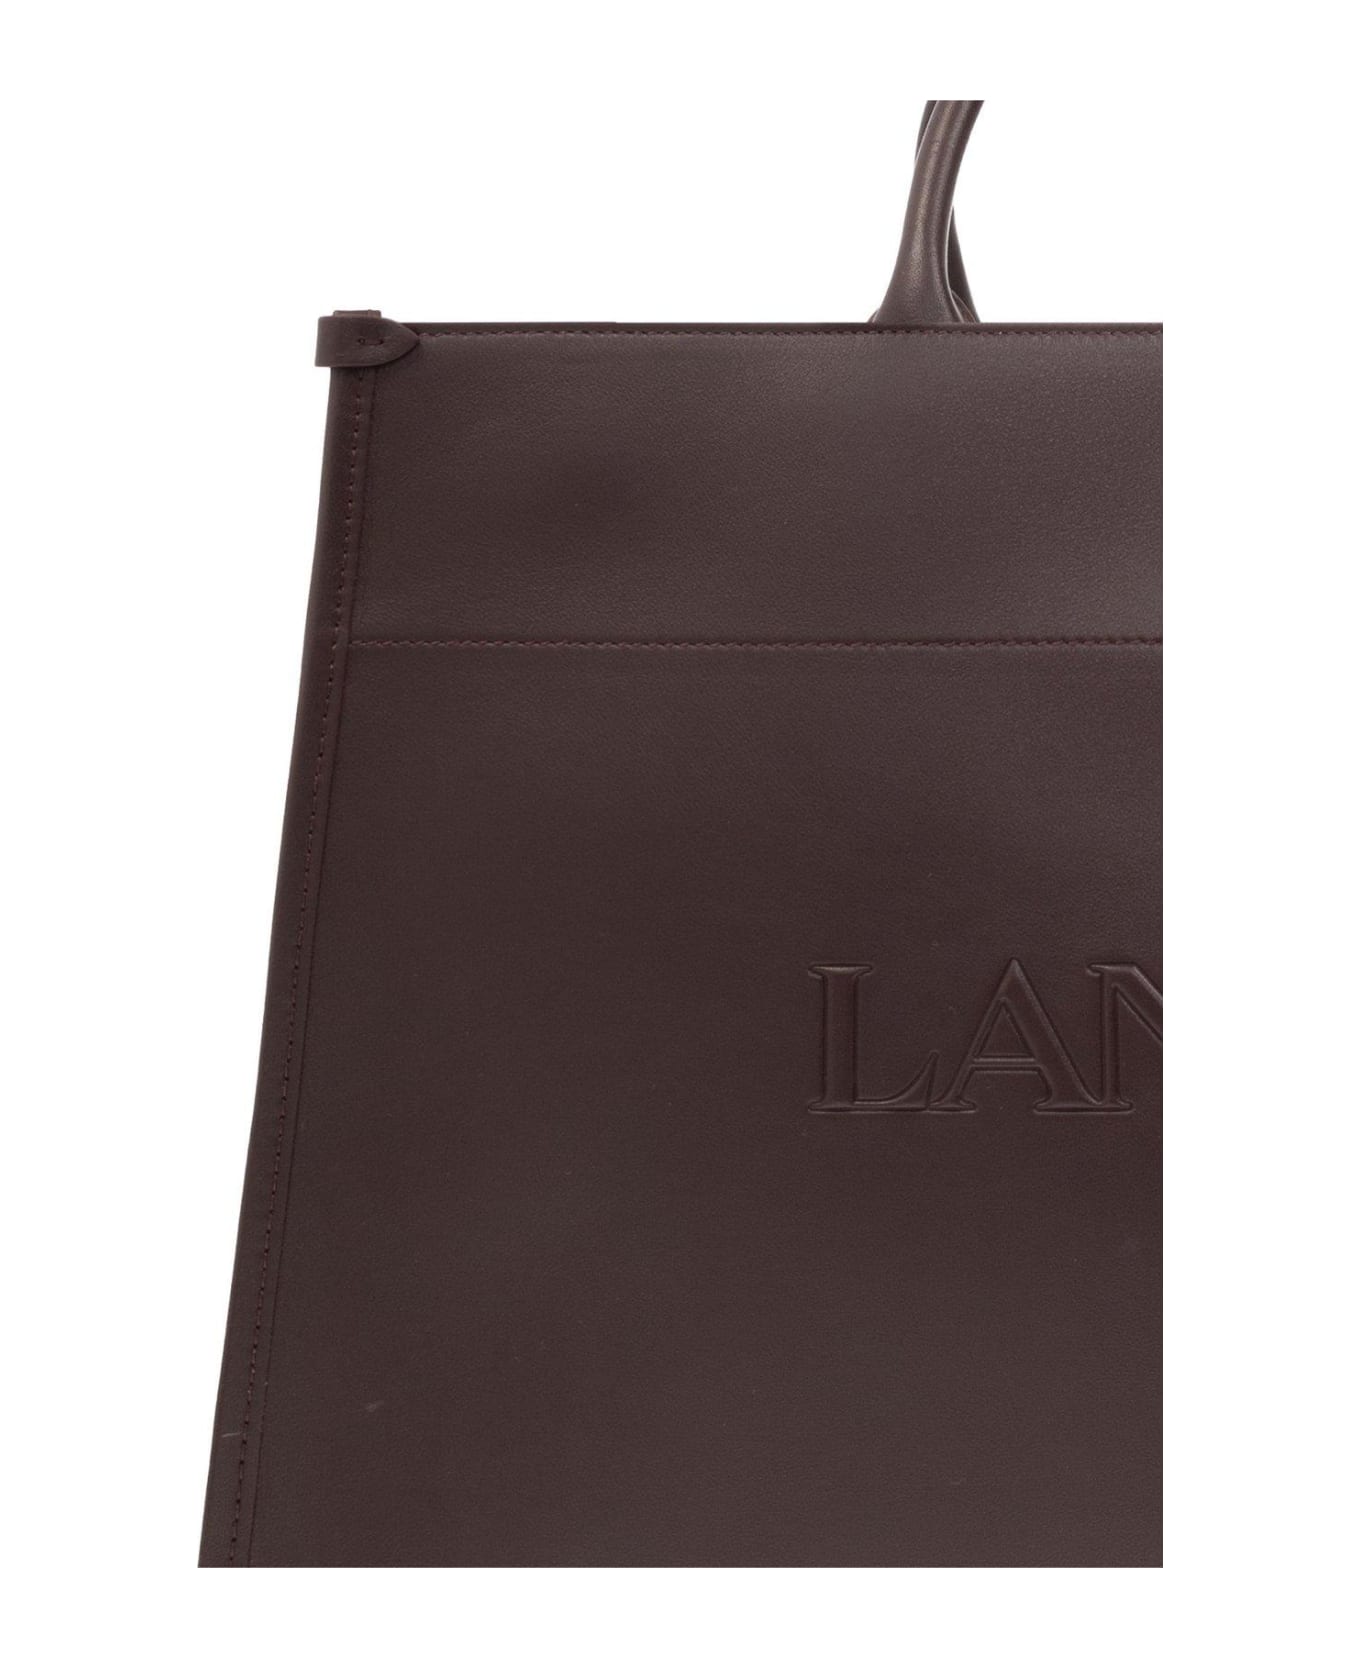 Lanvin Logo Embossed Top Handle Bag - Amarena